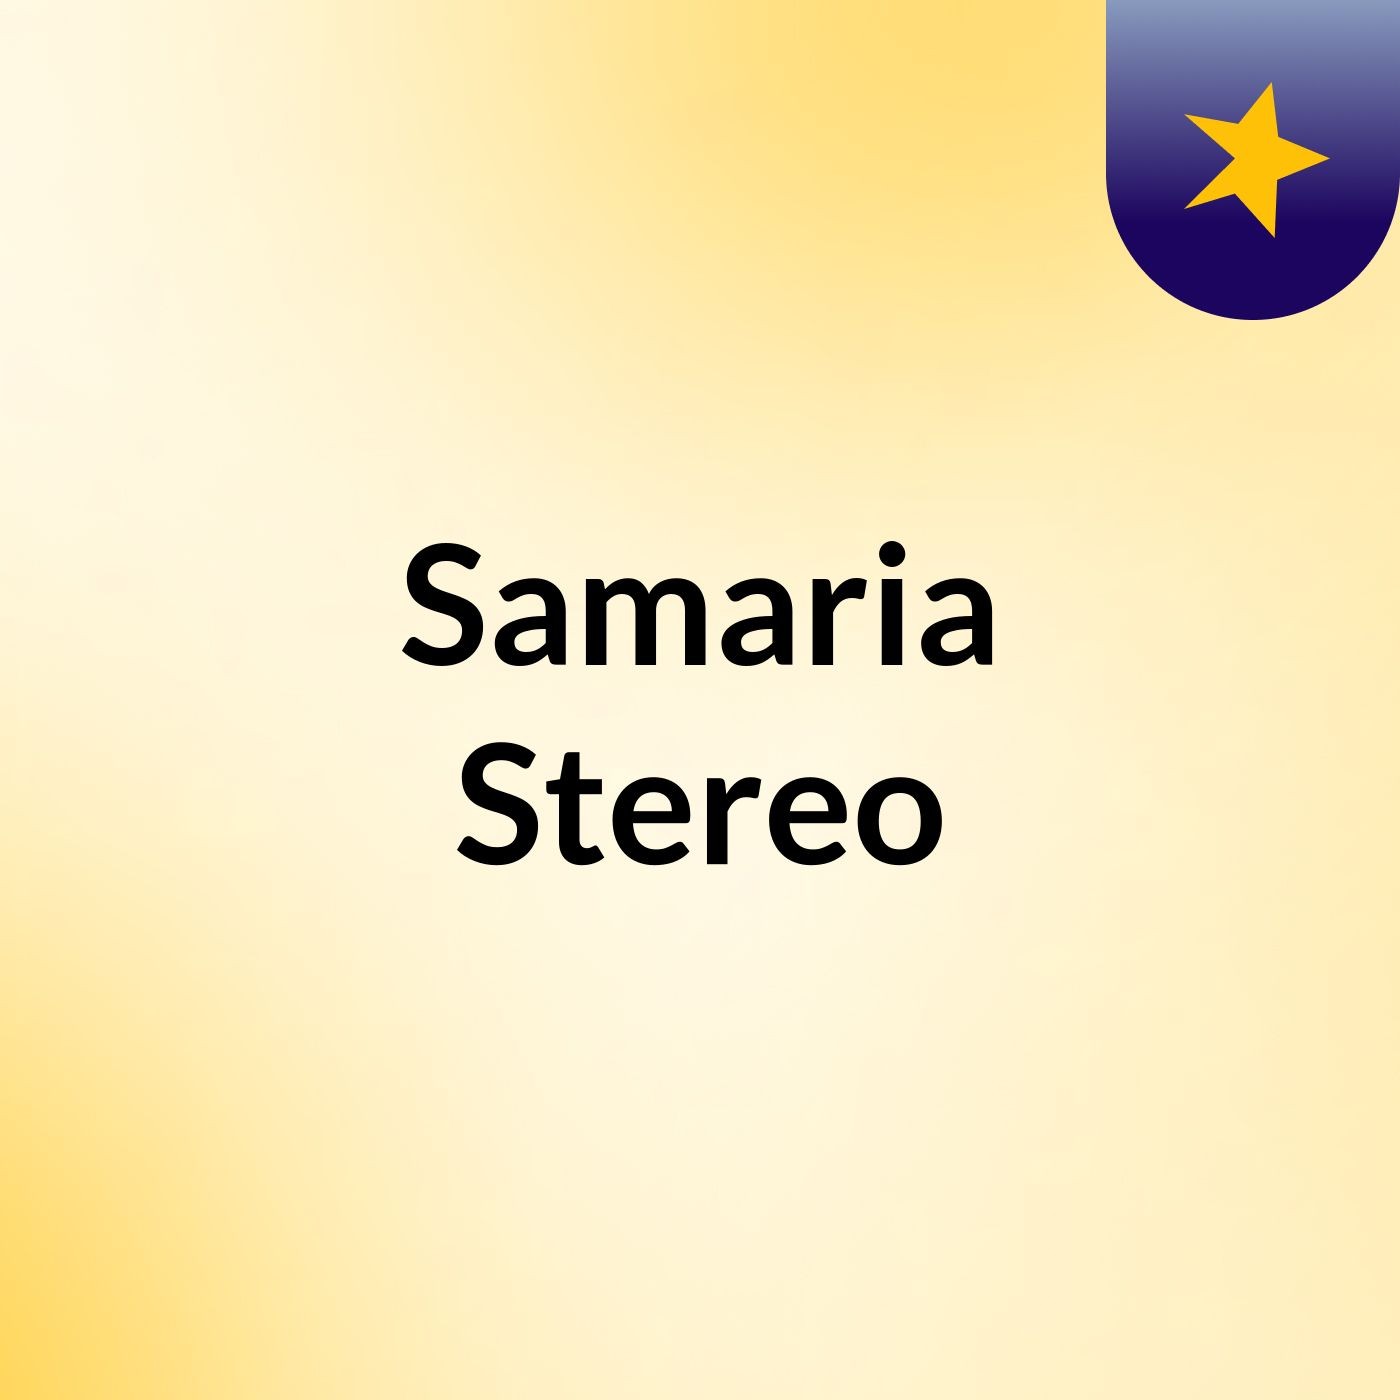 Samaria Stereo